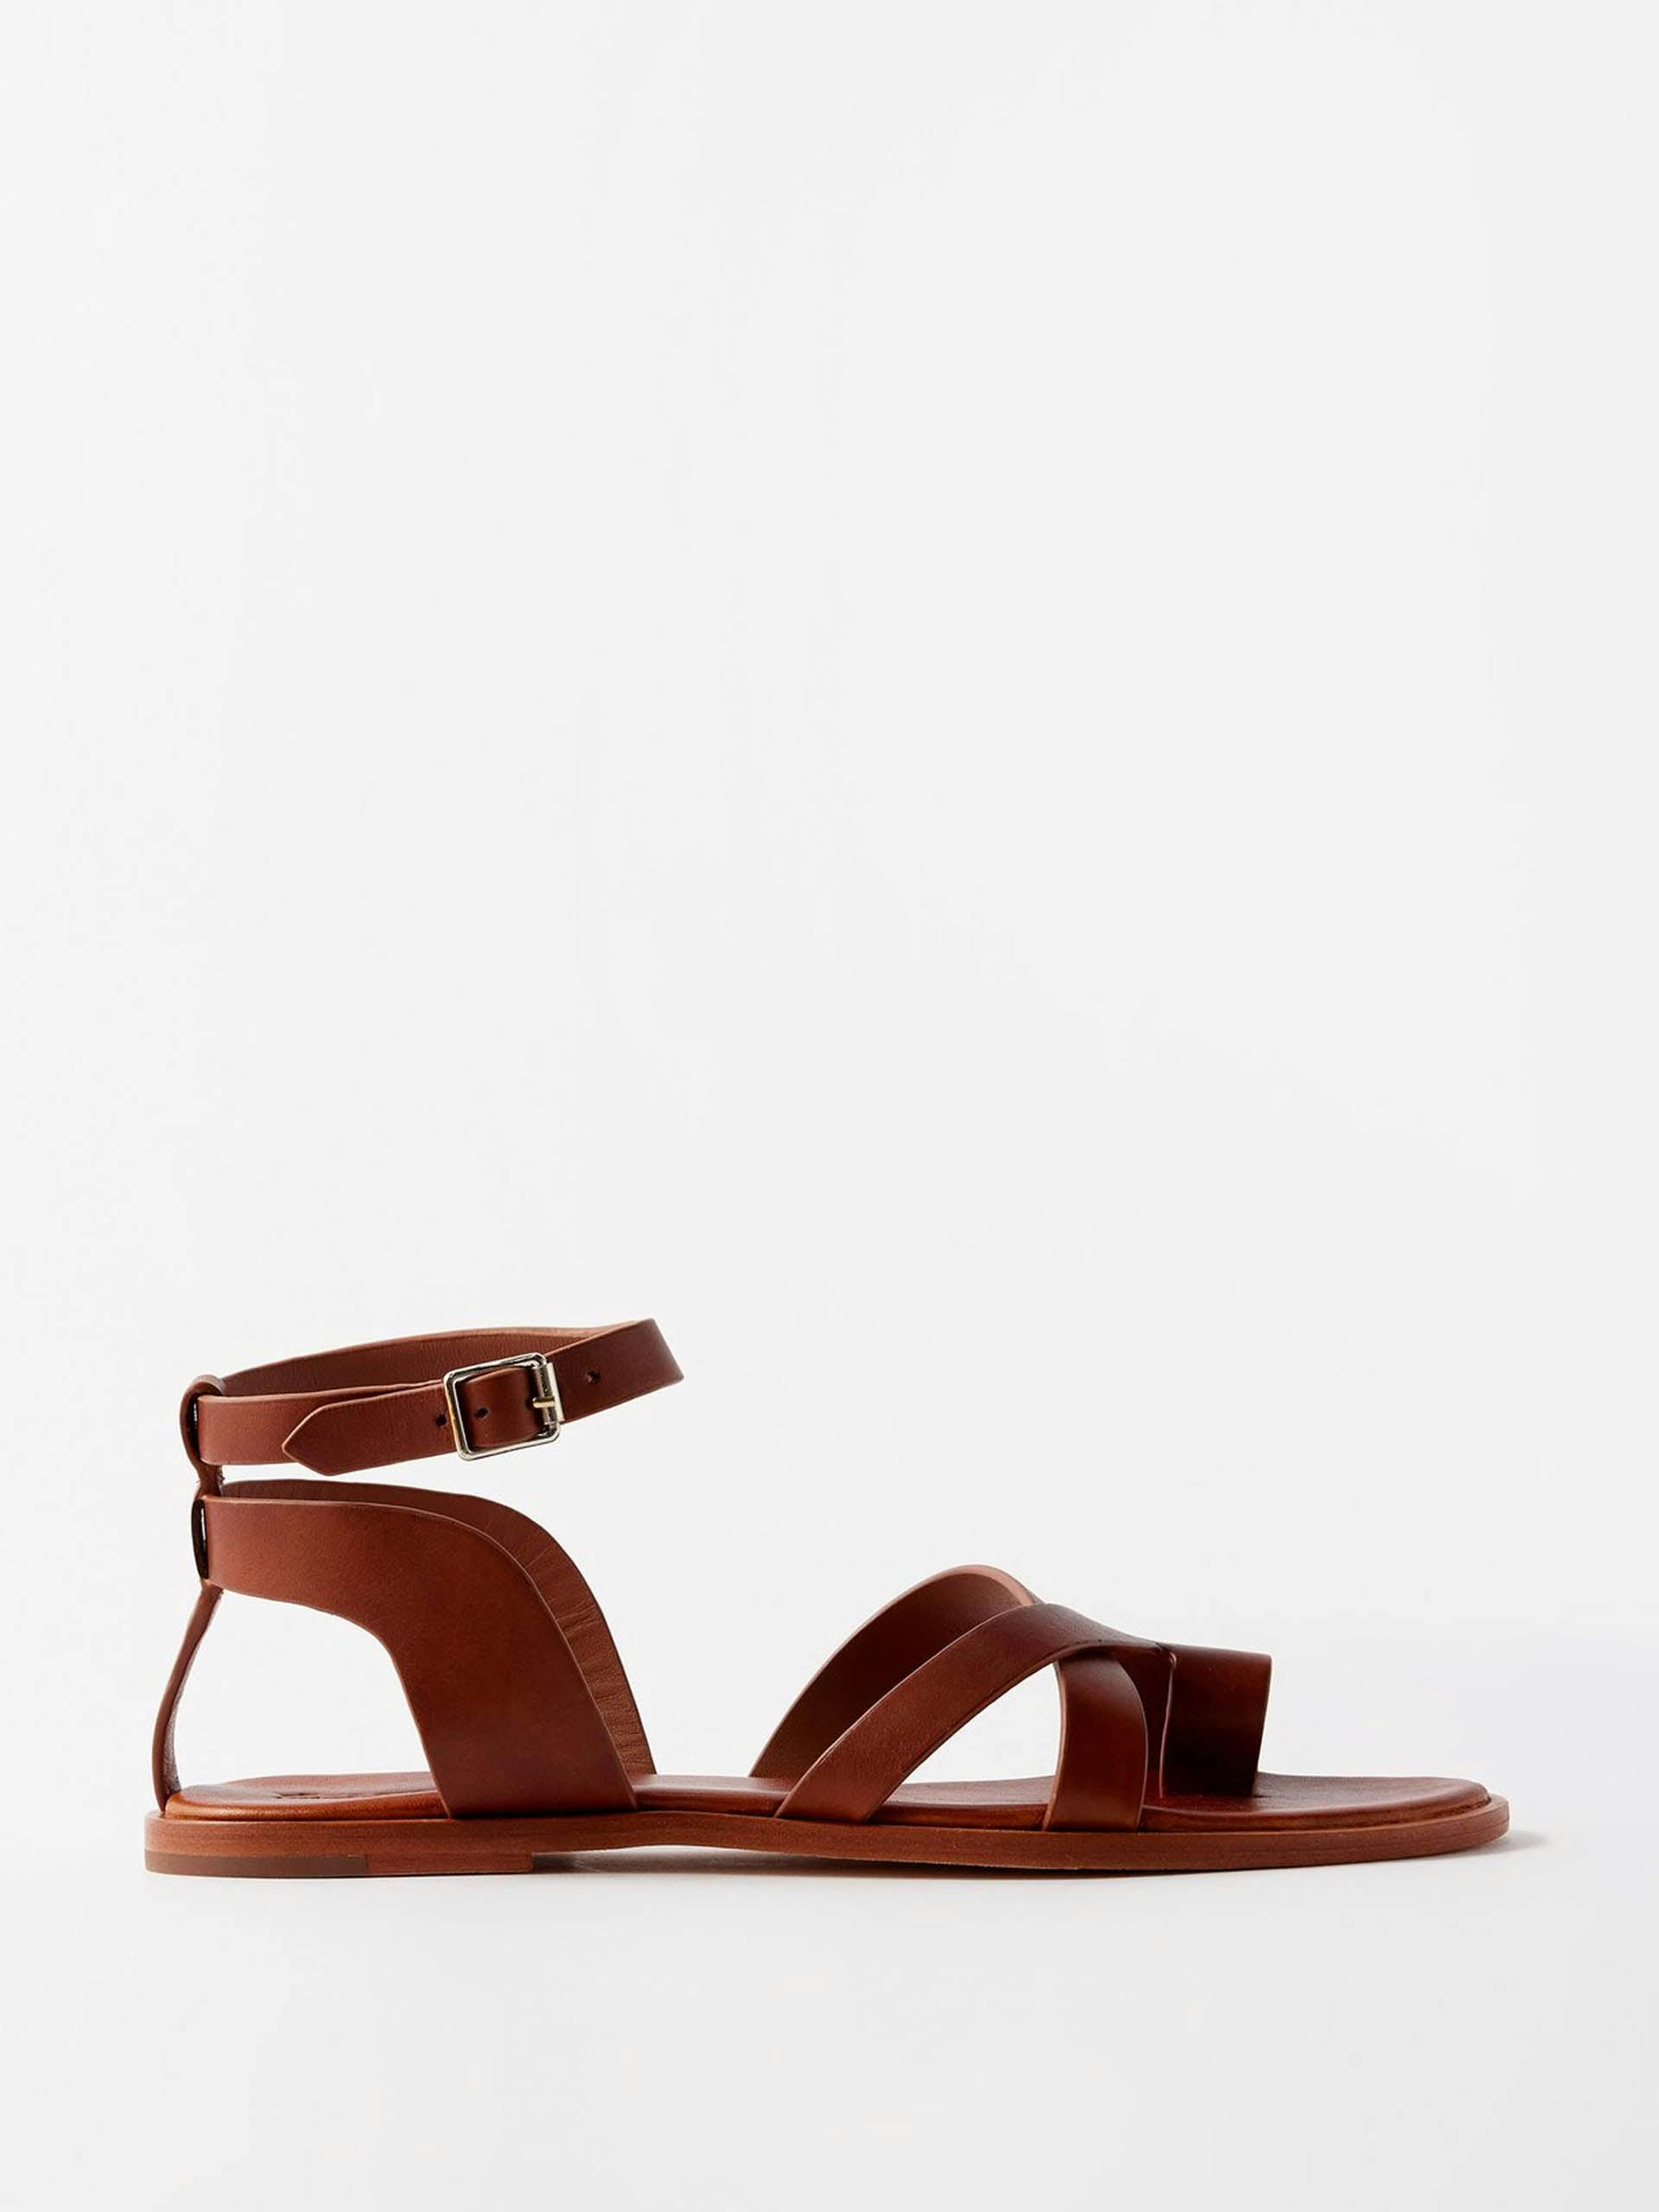 Tan flat leather sandals